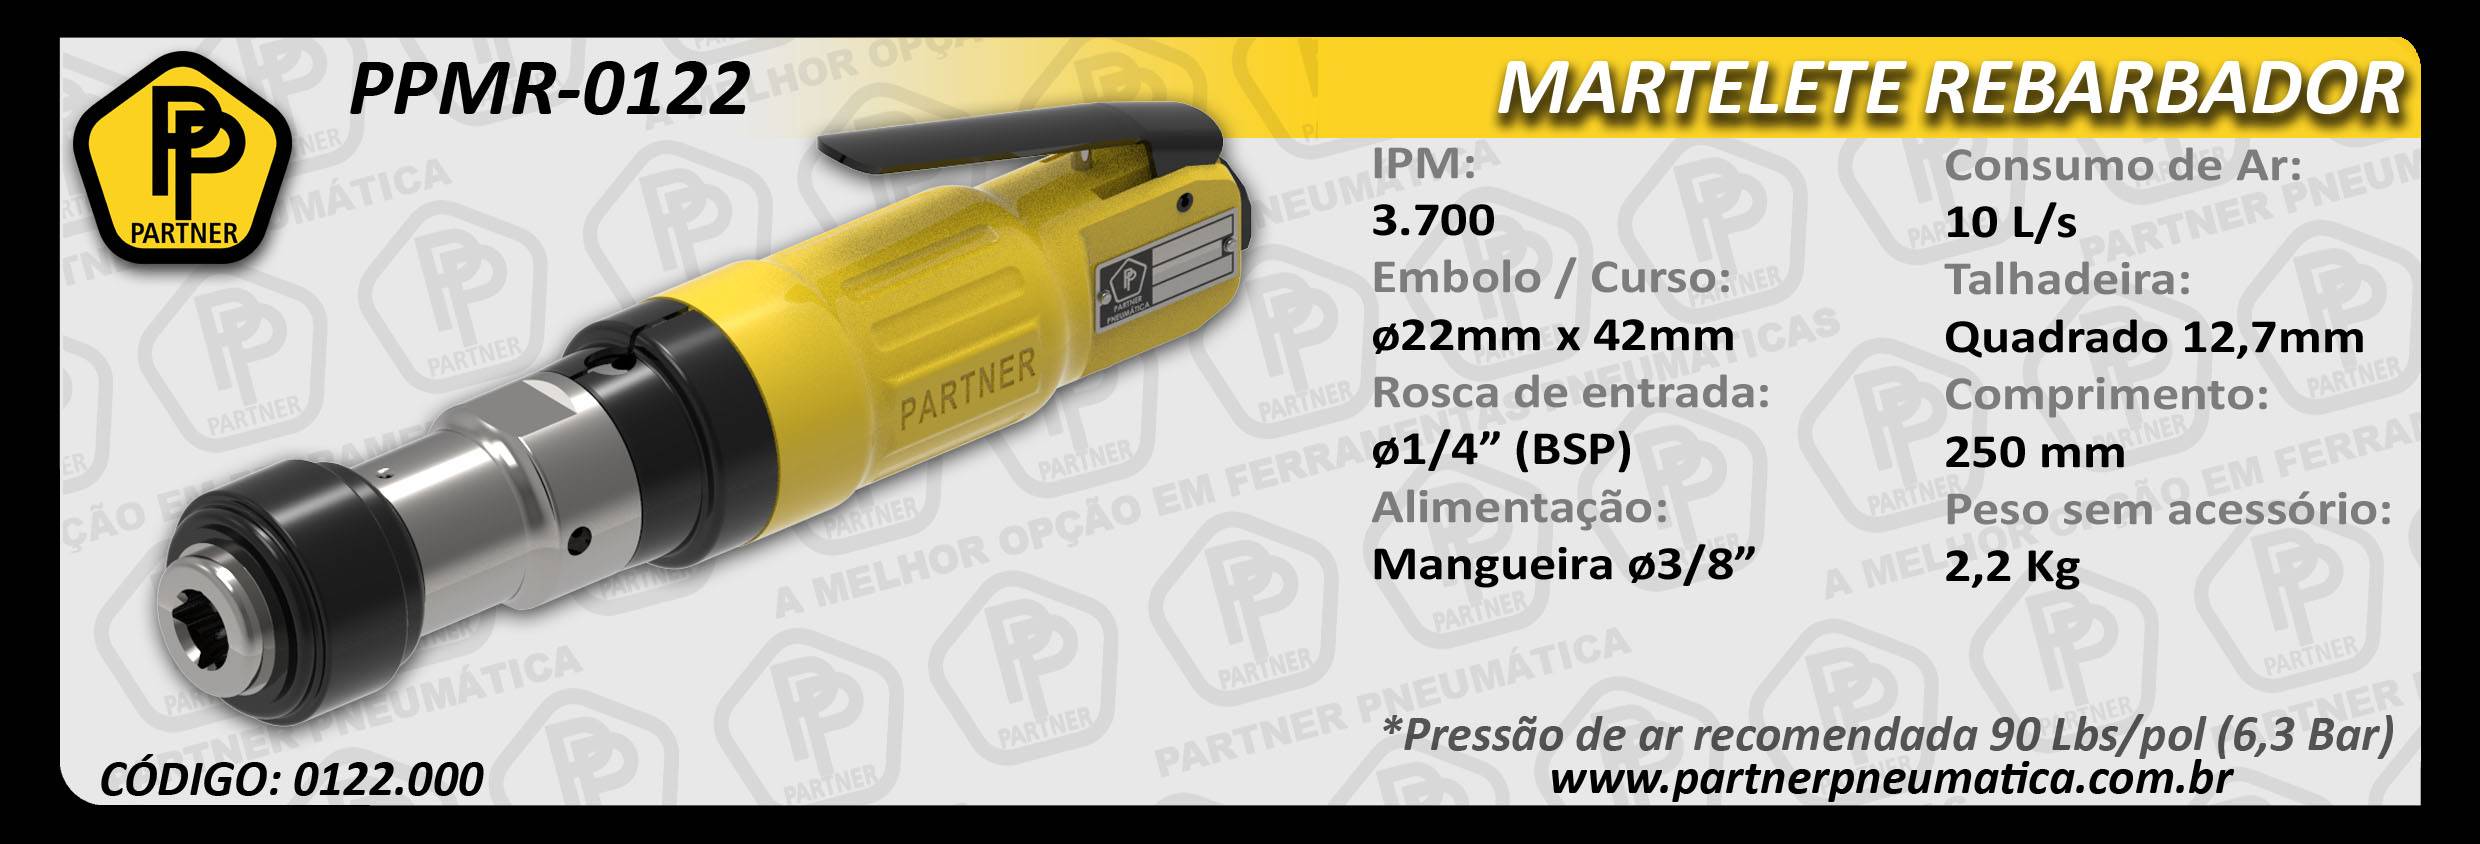 Martelete PPMR-0122